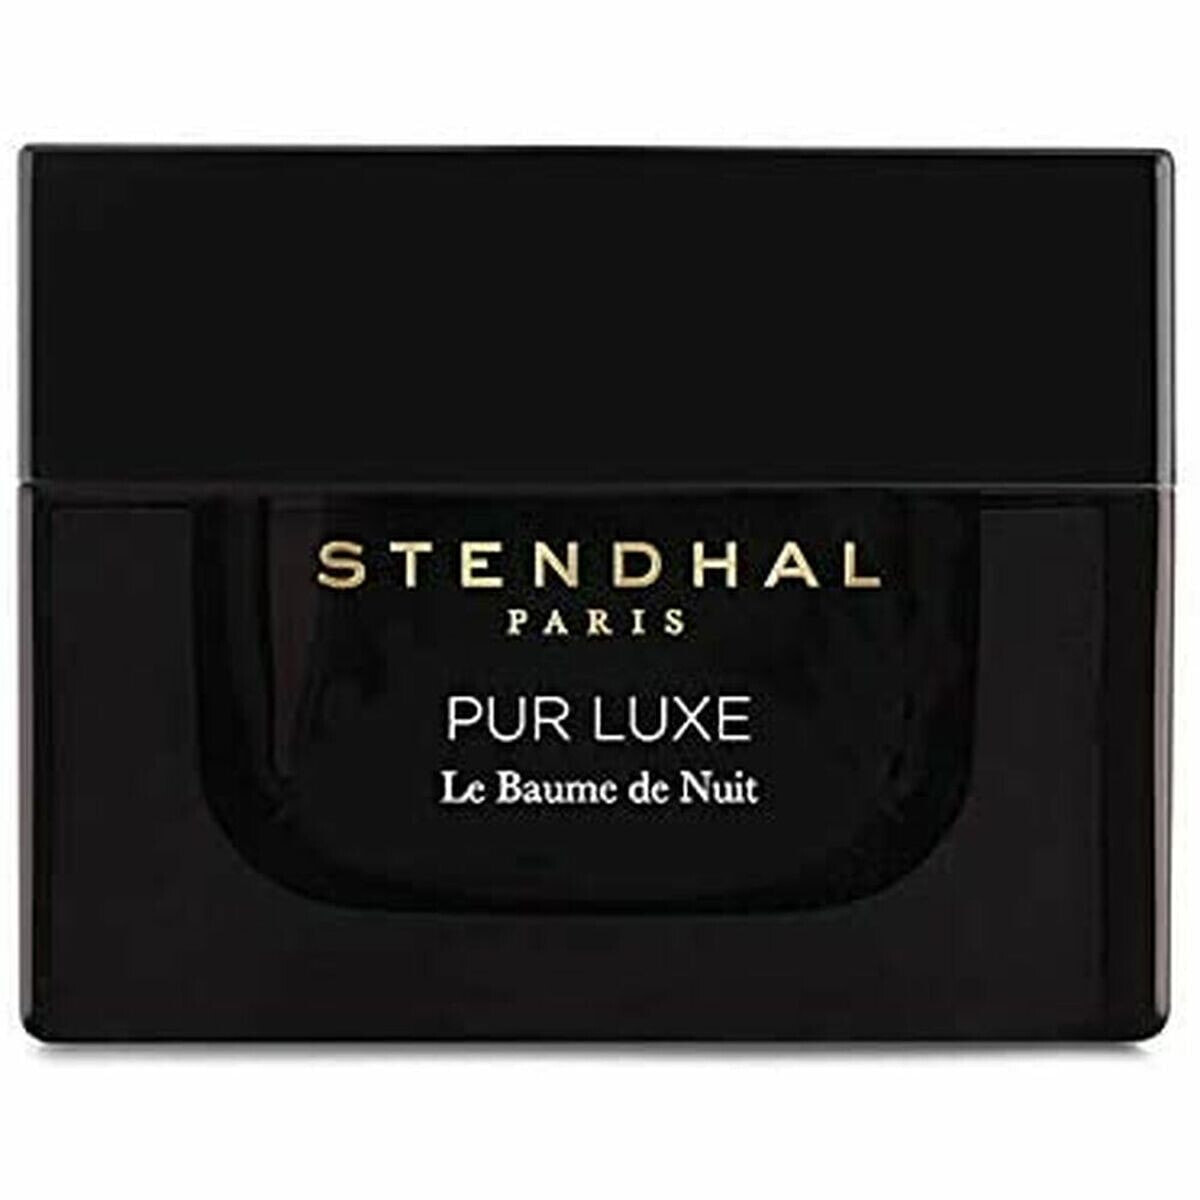 Ночной крем Pure Luxe Stendhal (50 ml)